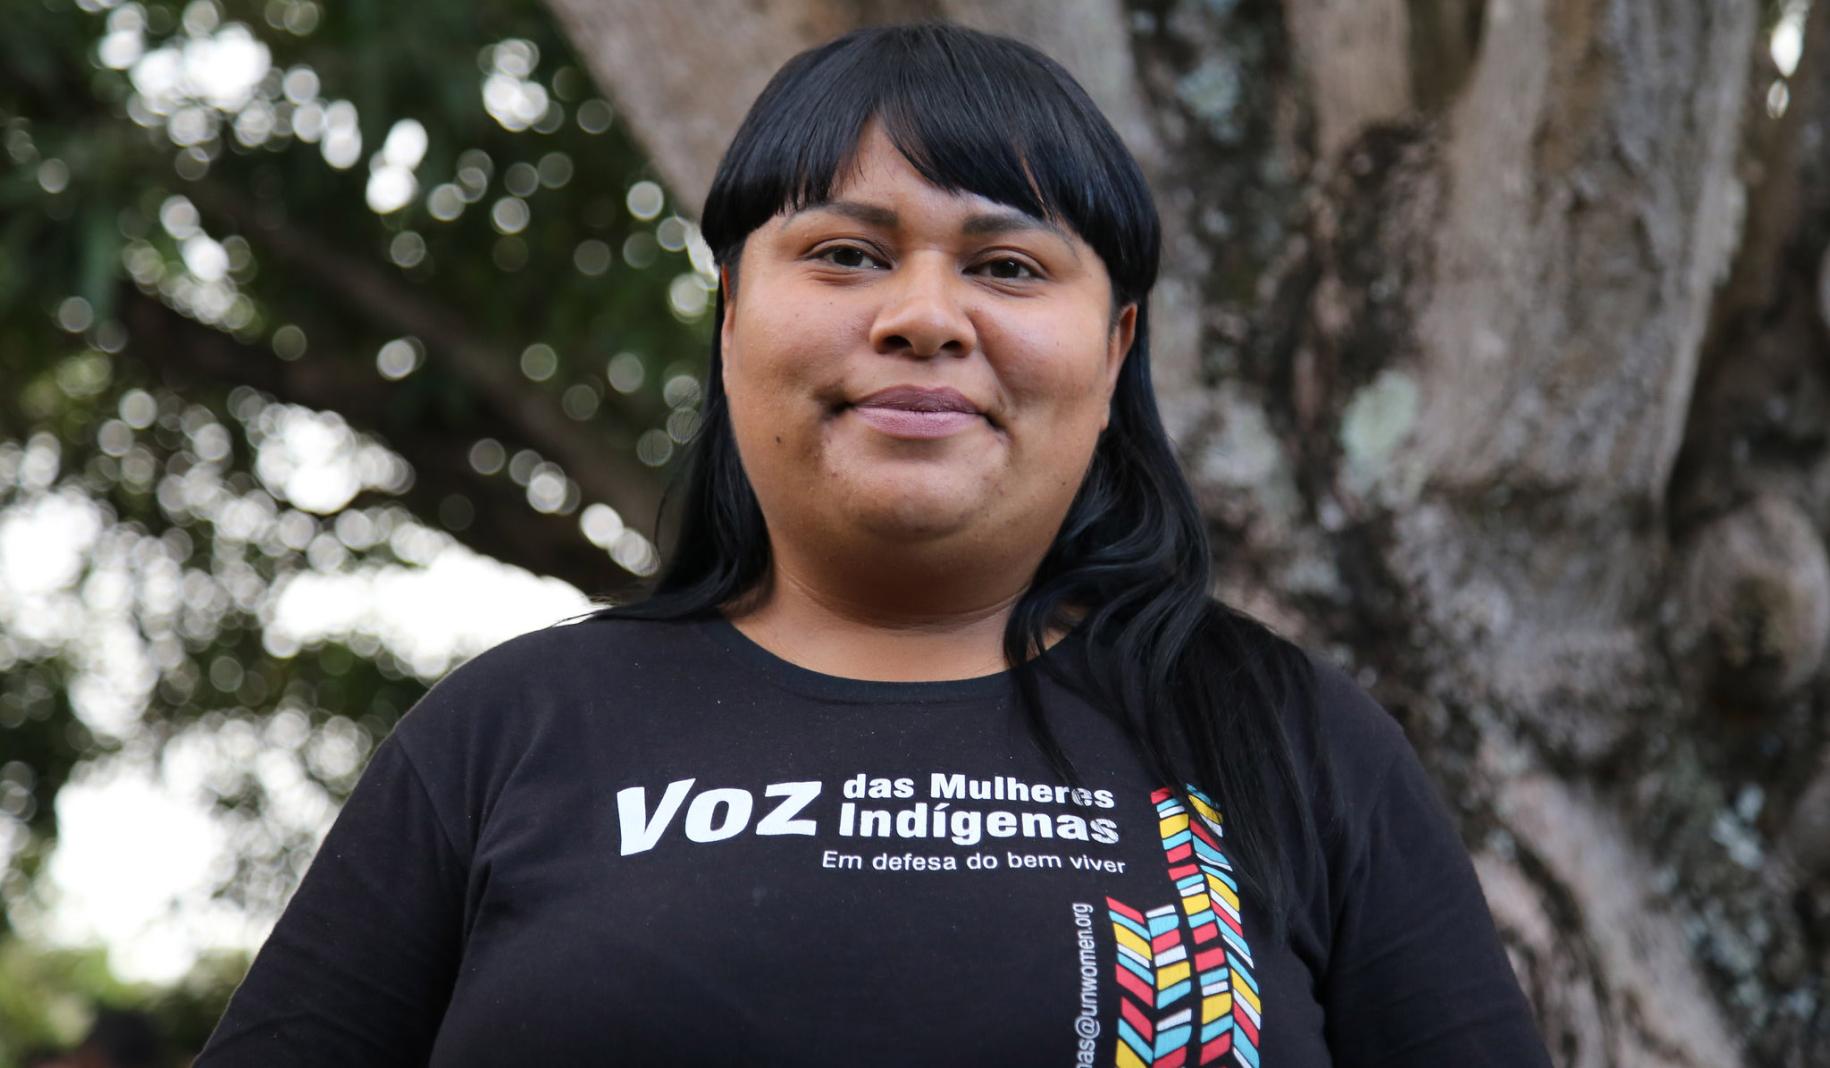 Tsitsina Xavante is part of the Voice of Indigenous Women initiative.